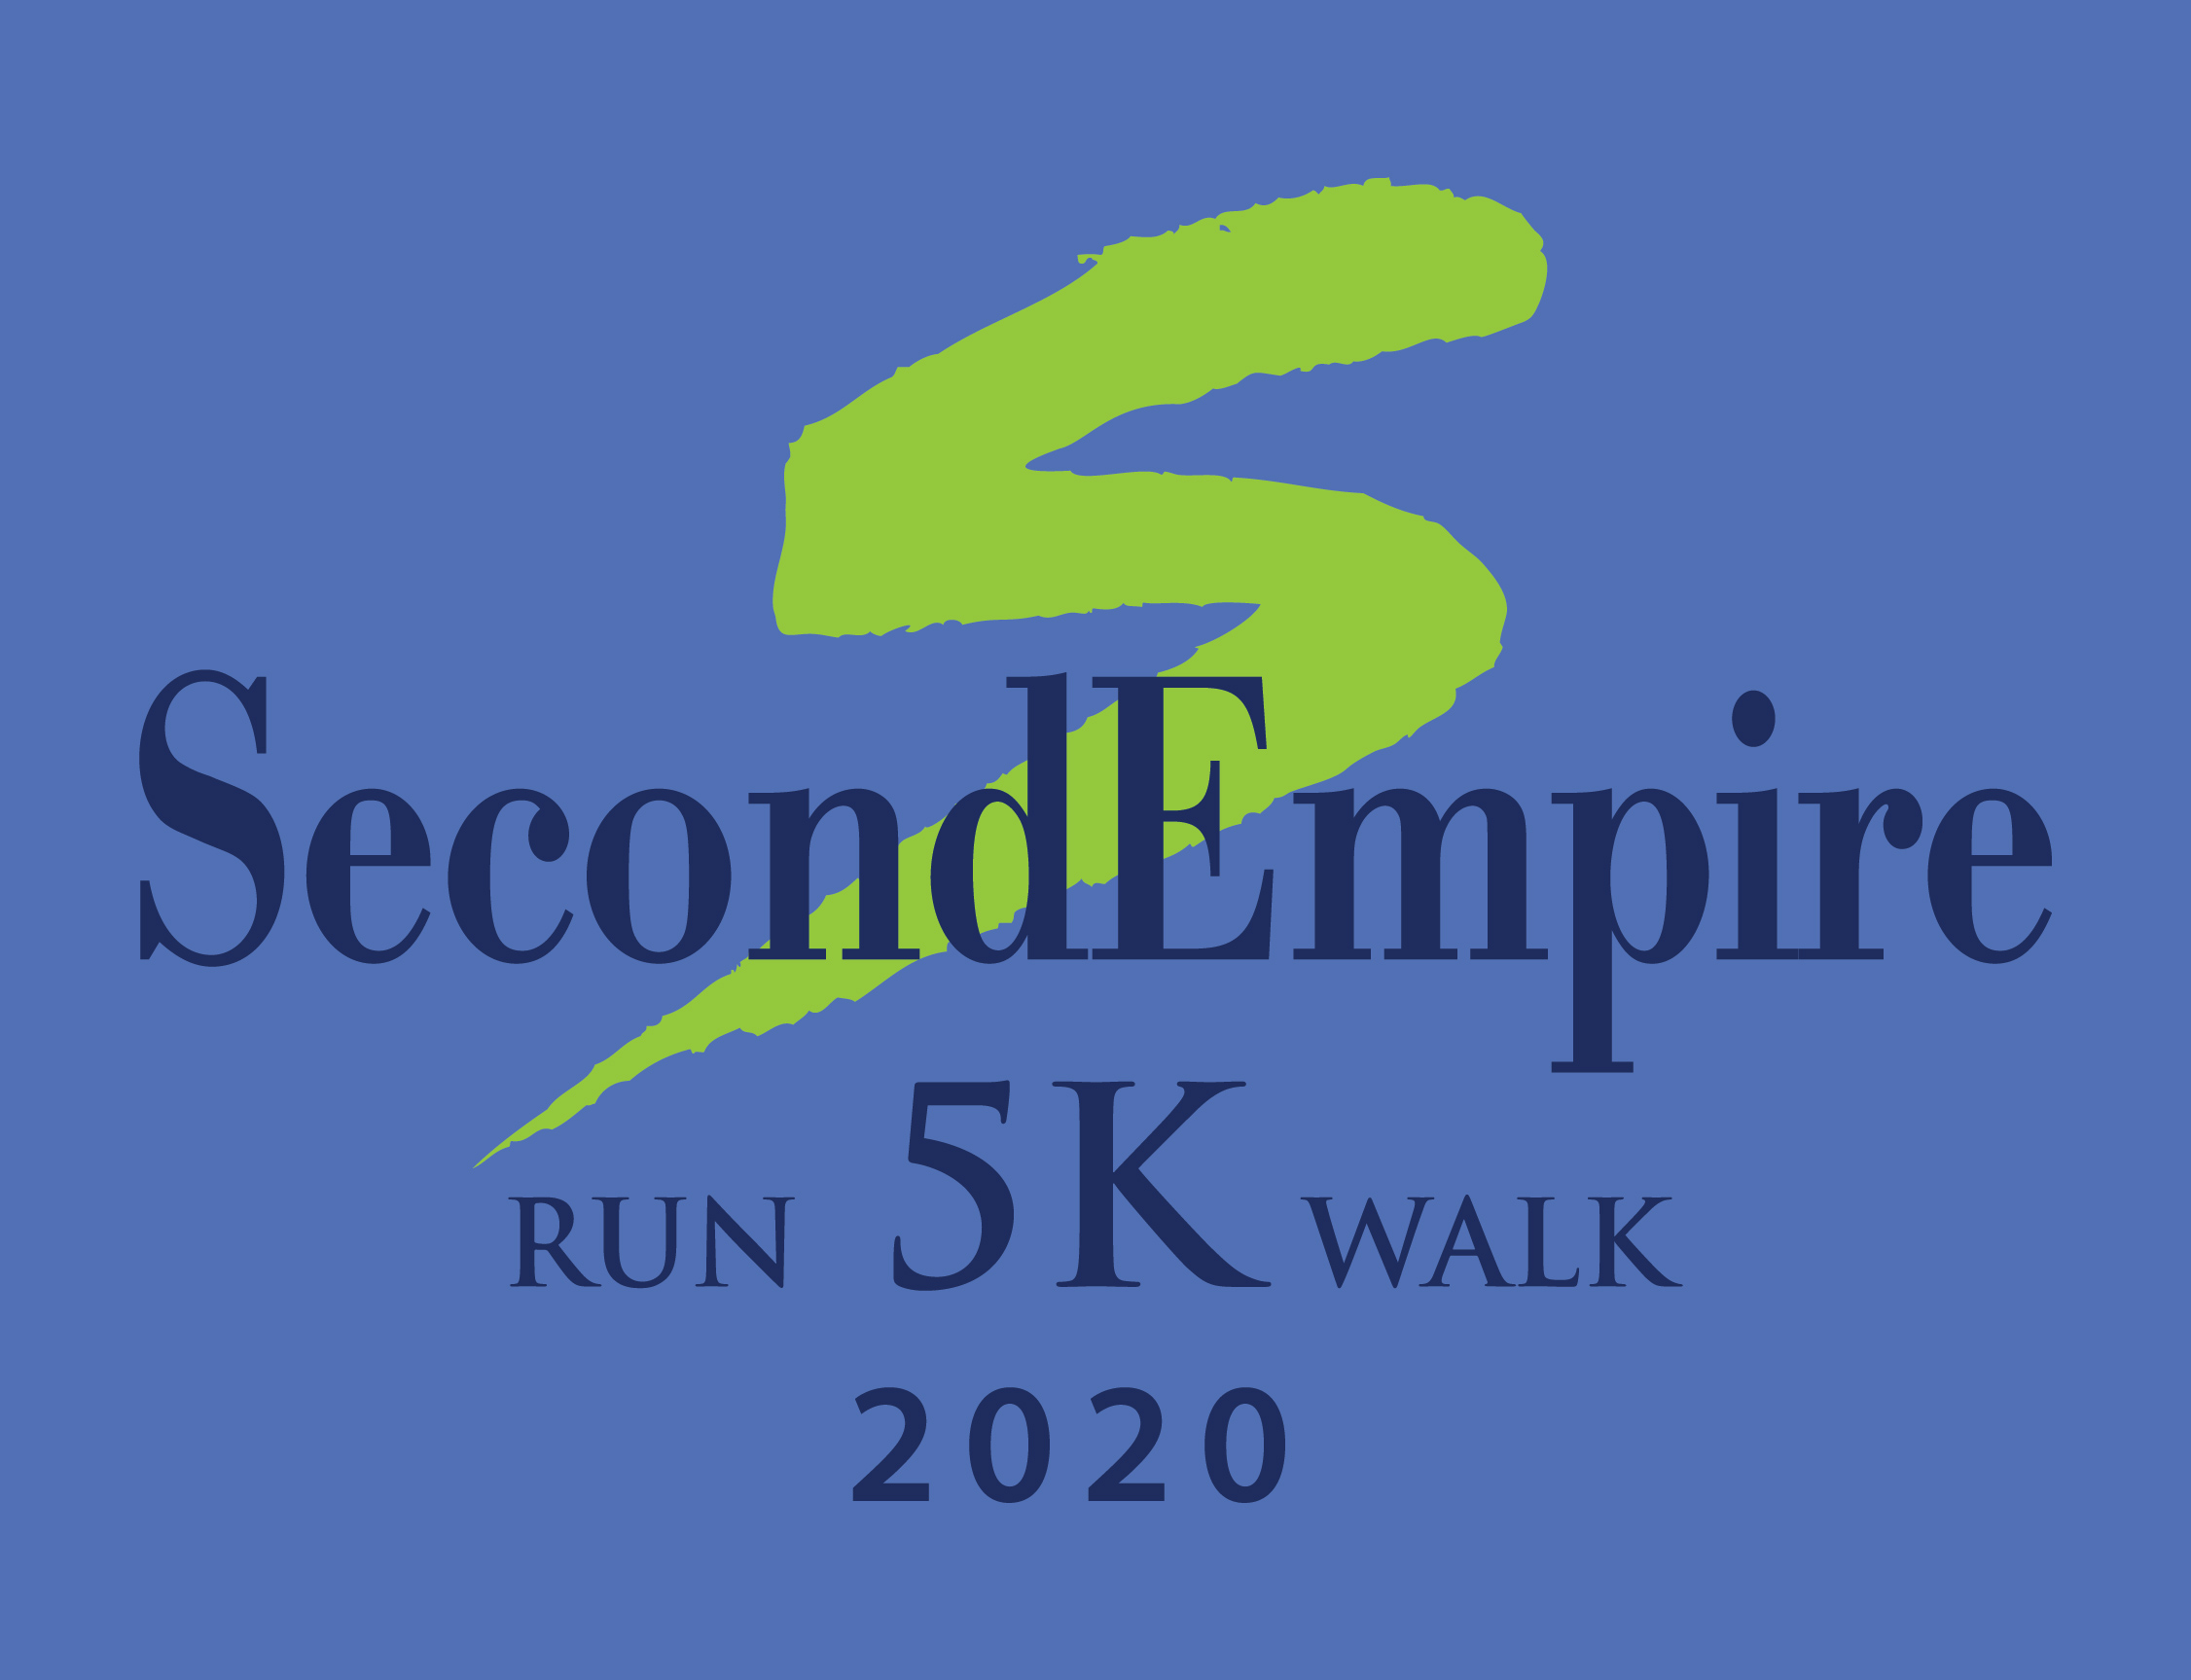 Second Empire 5k Classic 2020